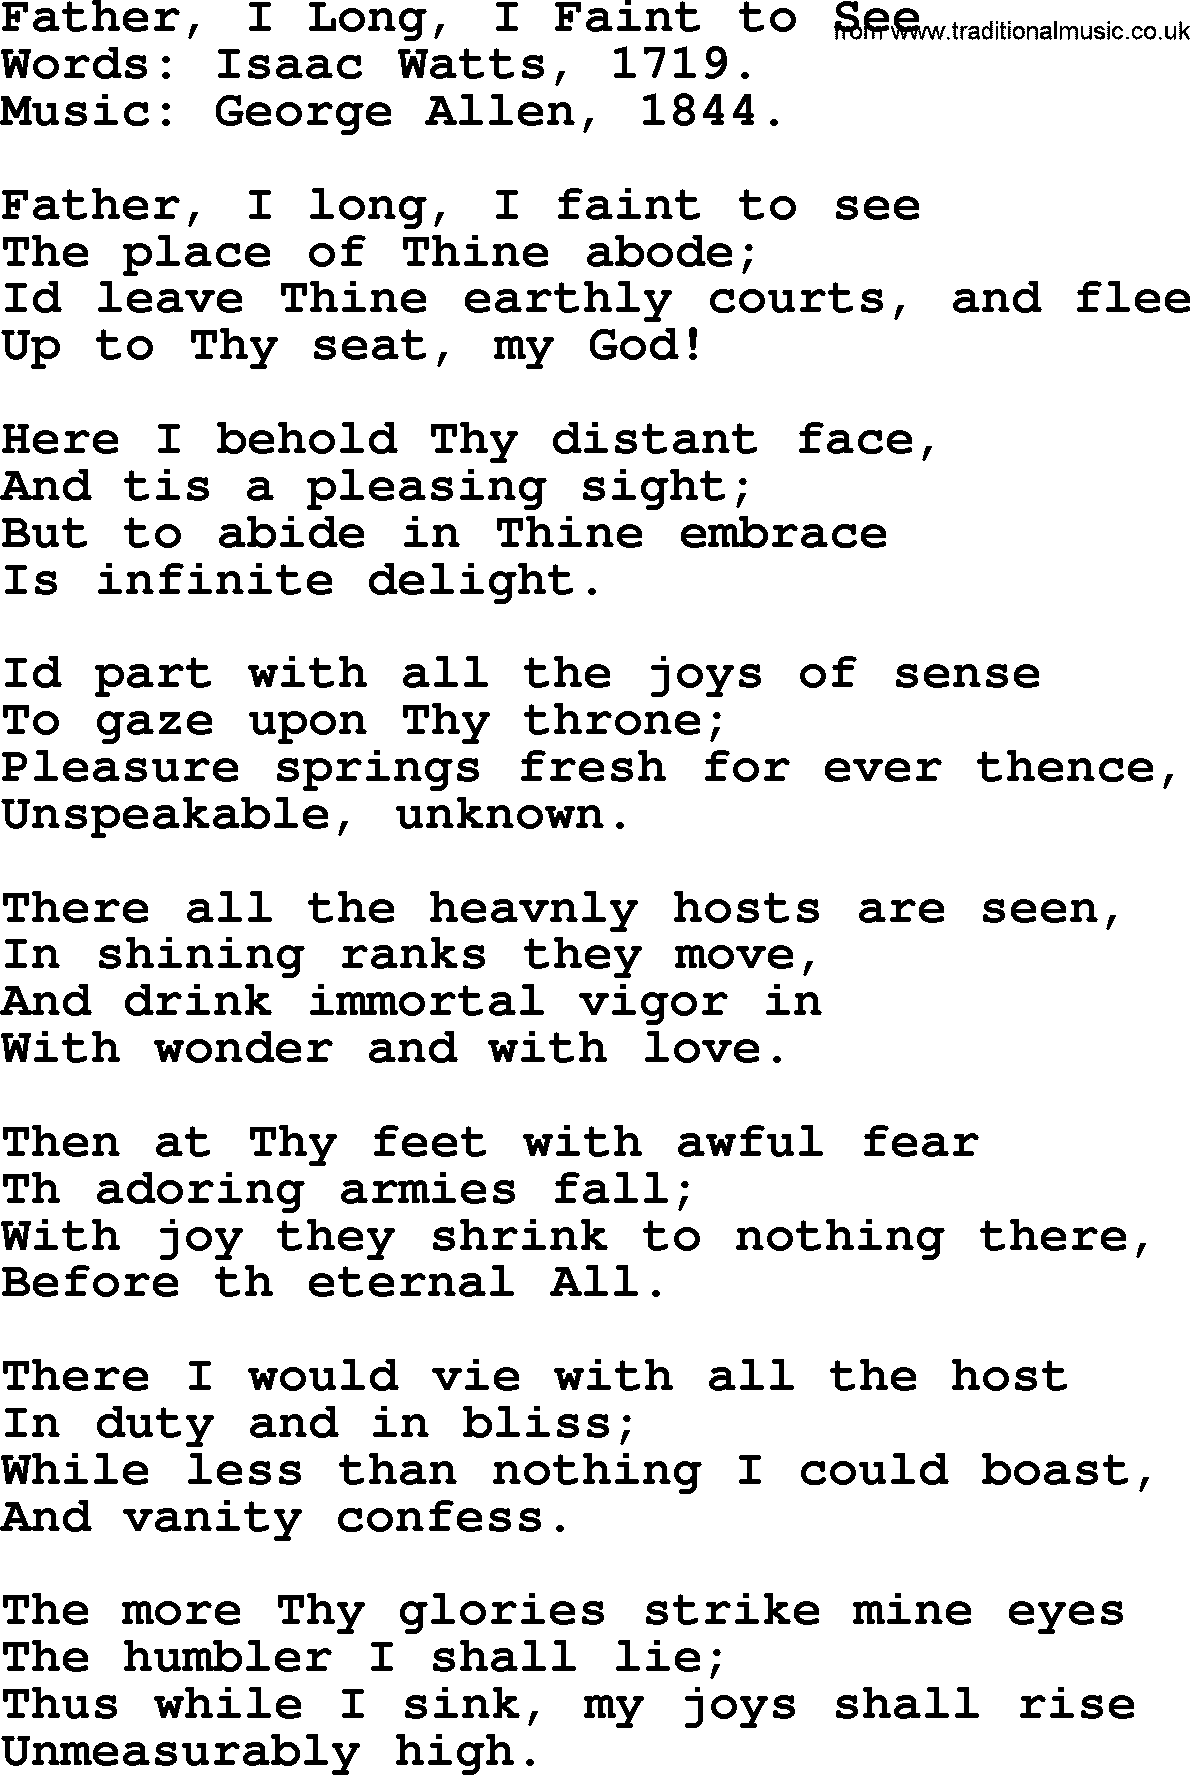 Isaac Watts Christian hymn: Father, I Long, I Faint to See- lyricss